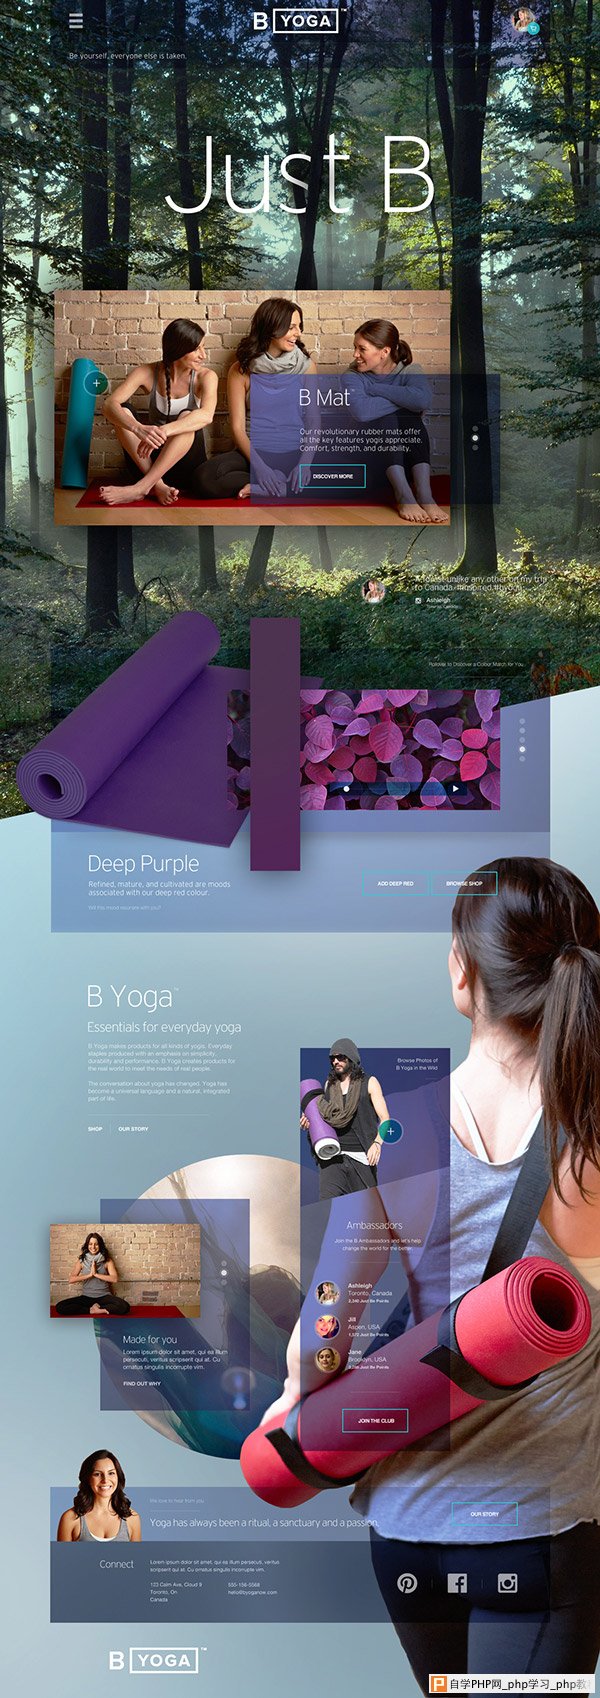 B Yoga Website by Agency Dominion